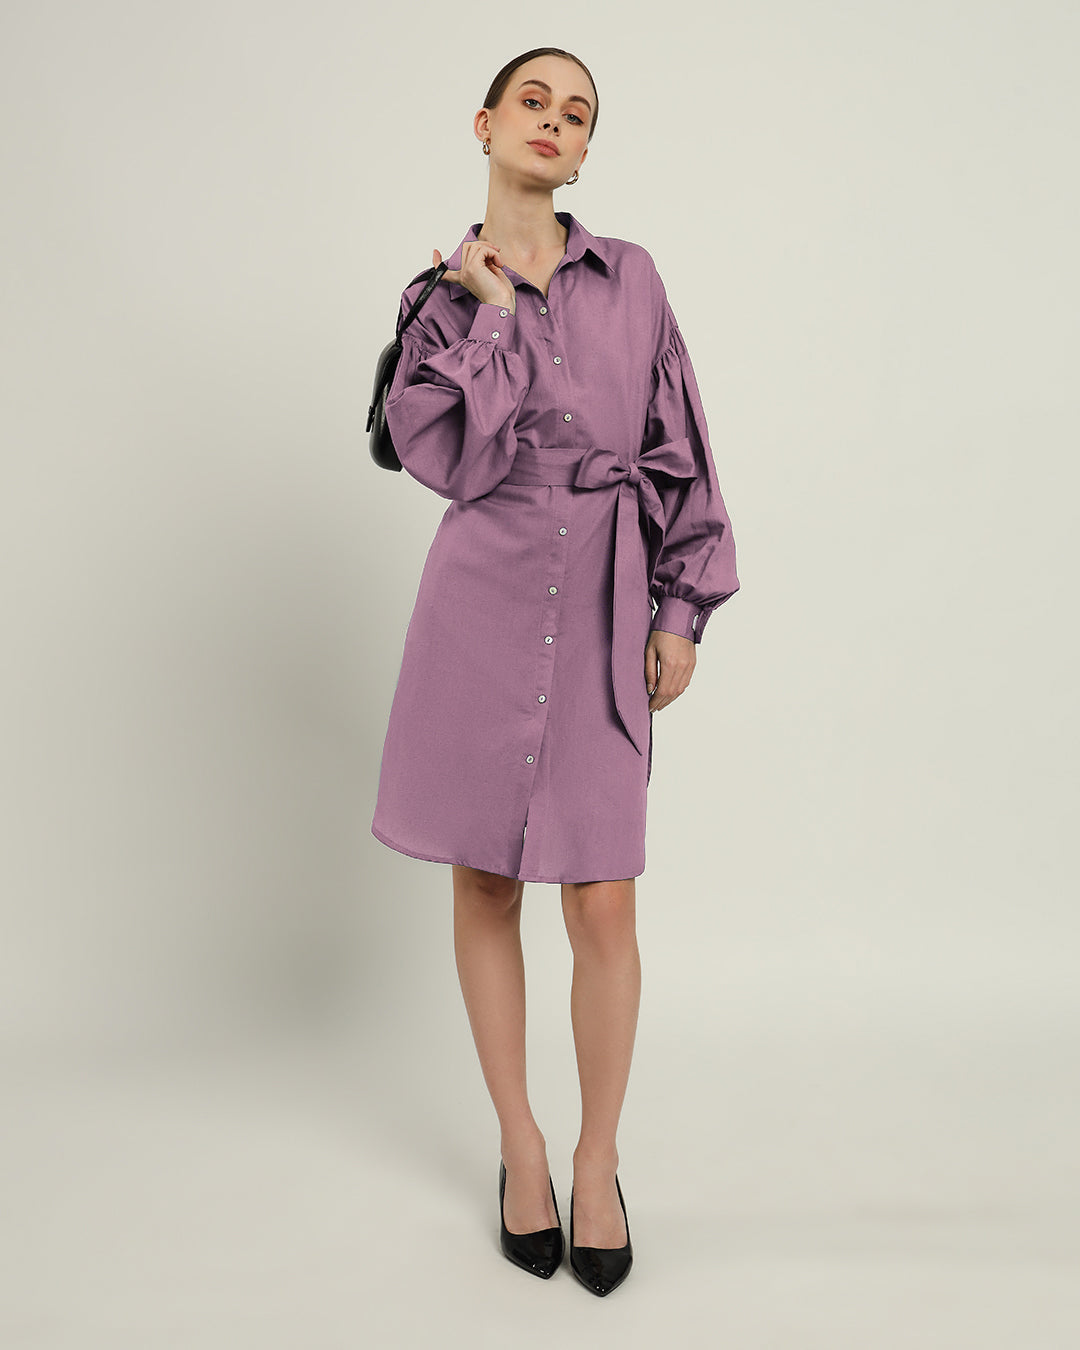 The Derby Purple Swirl Cotton Dress